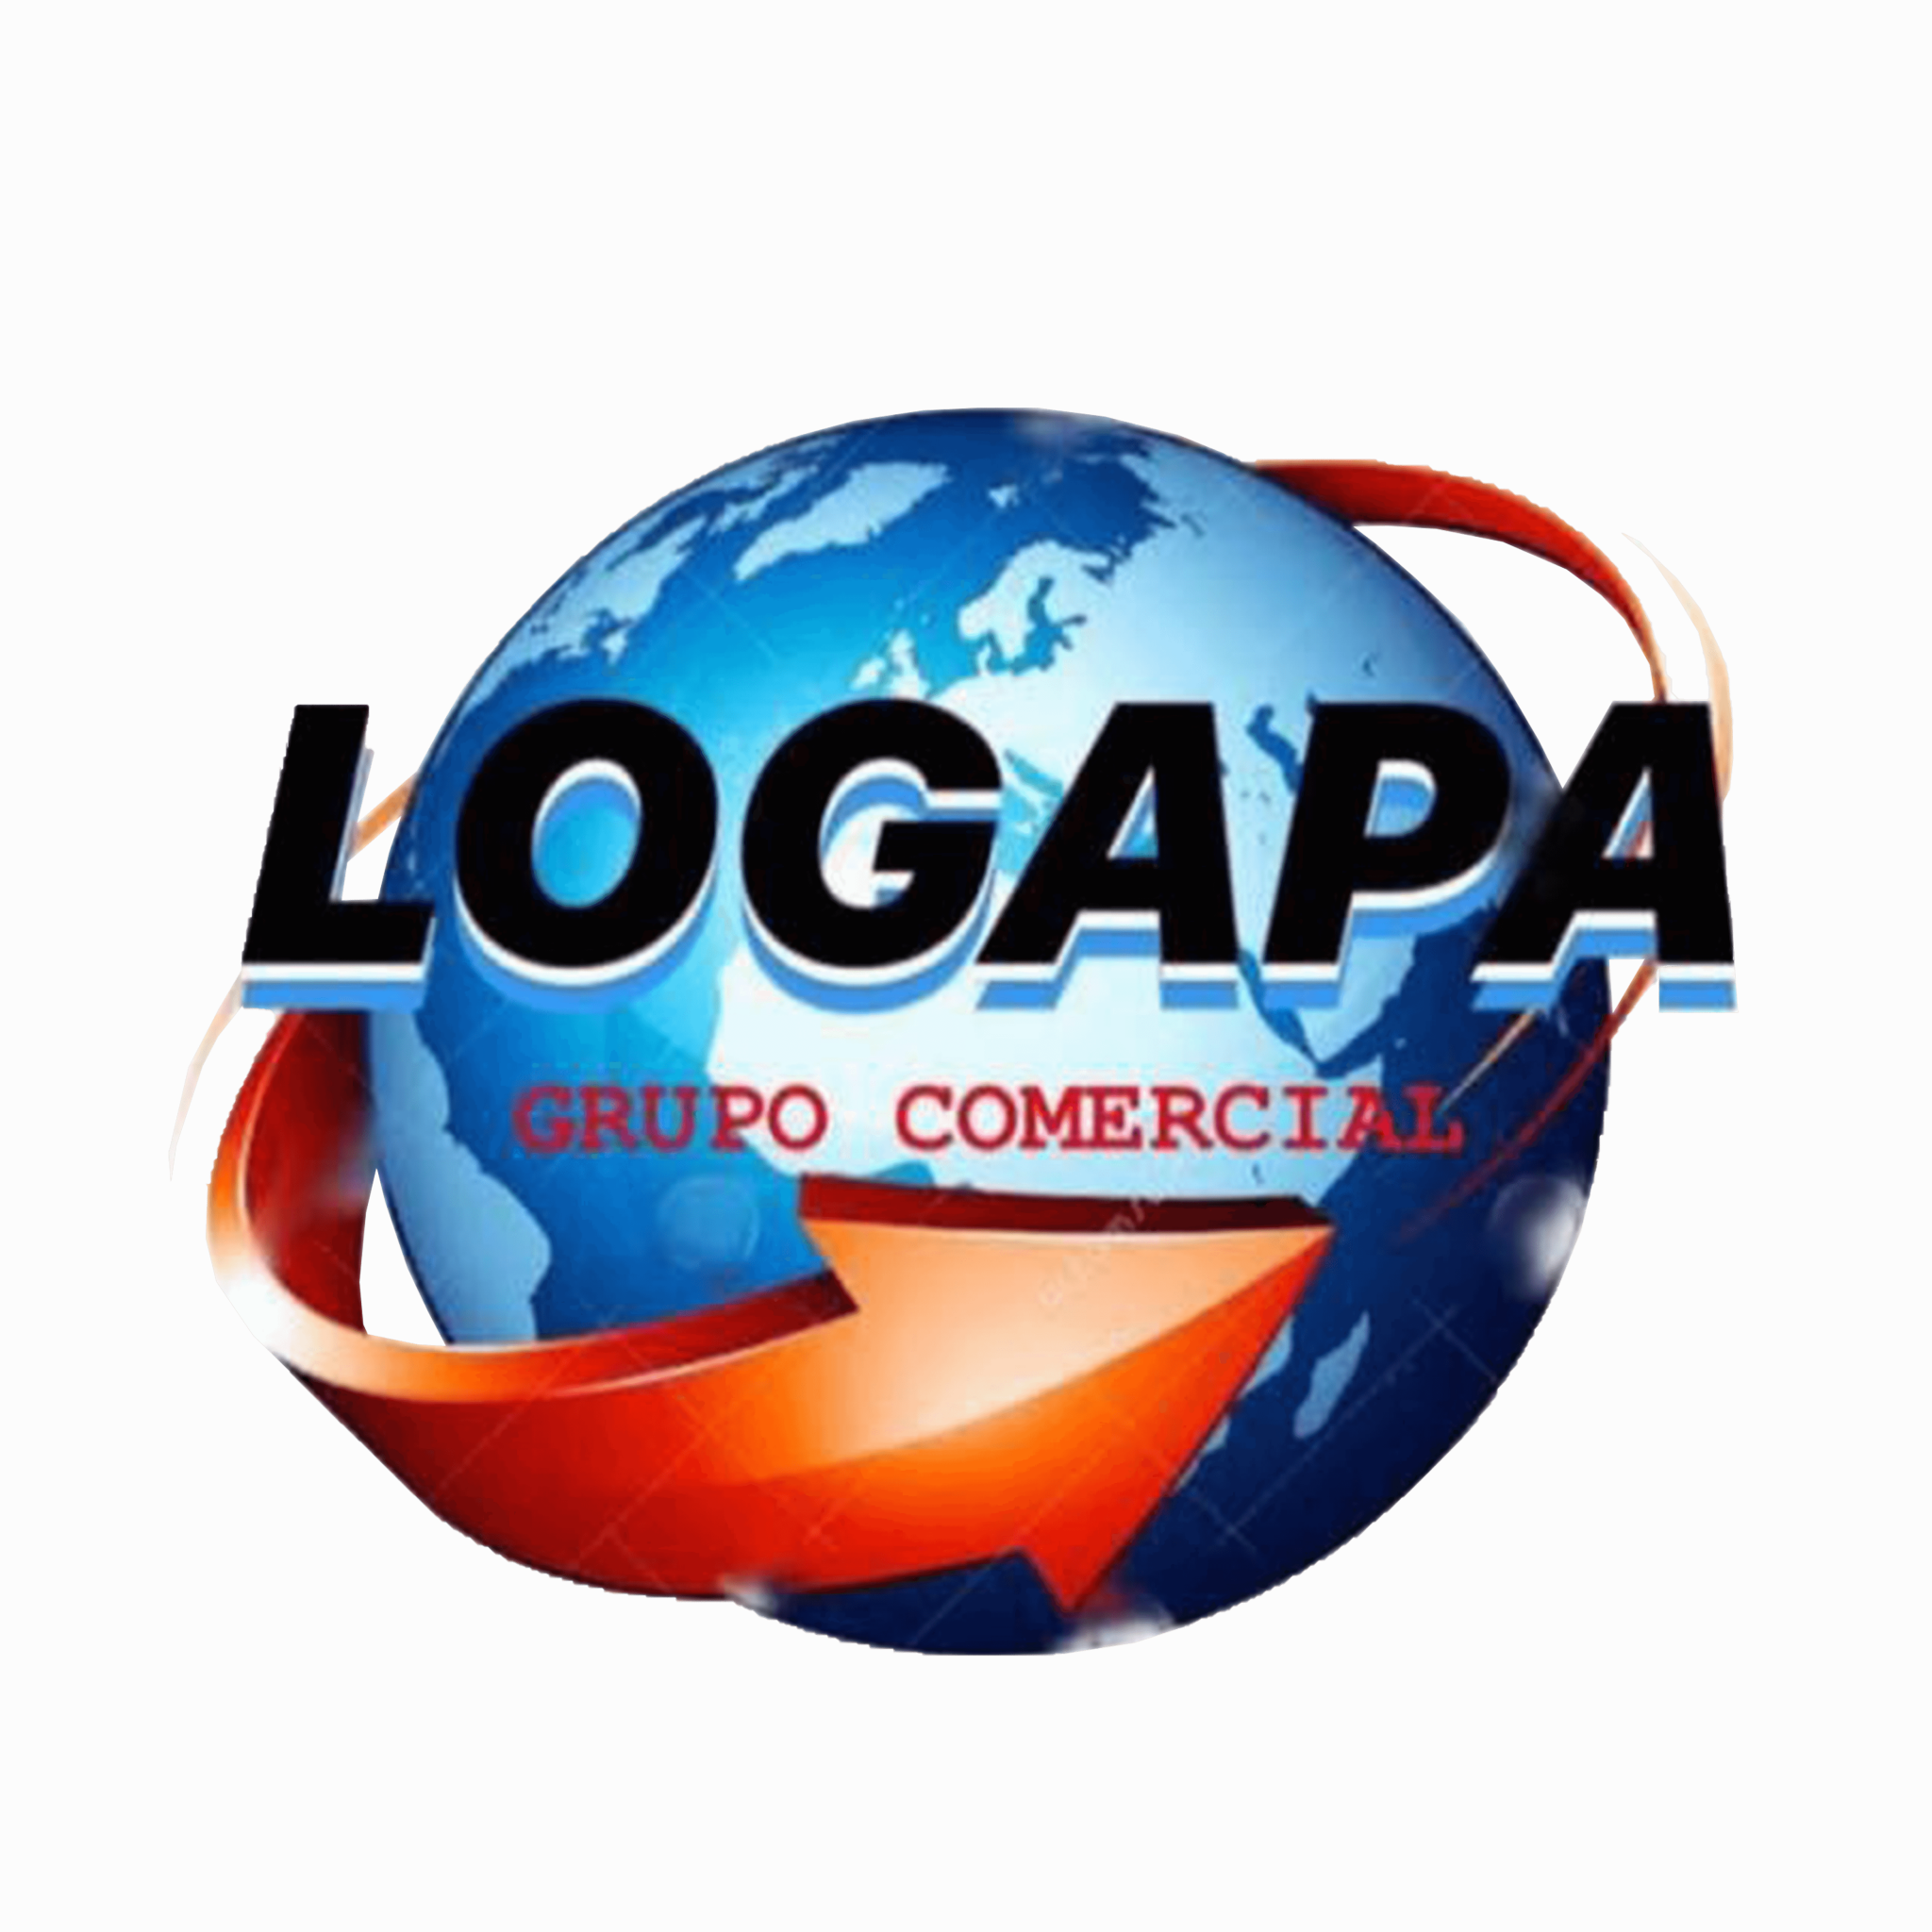 Logapa